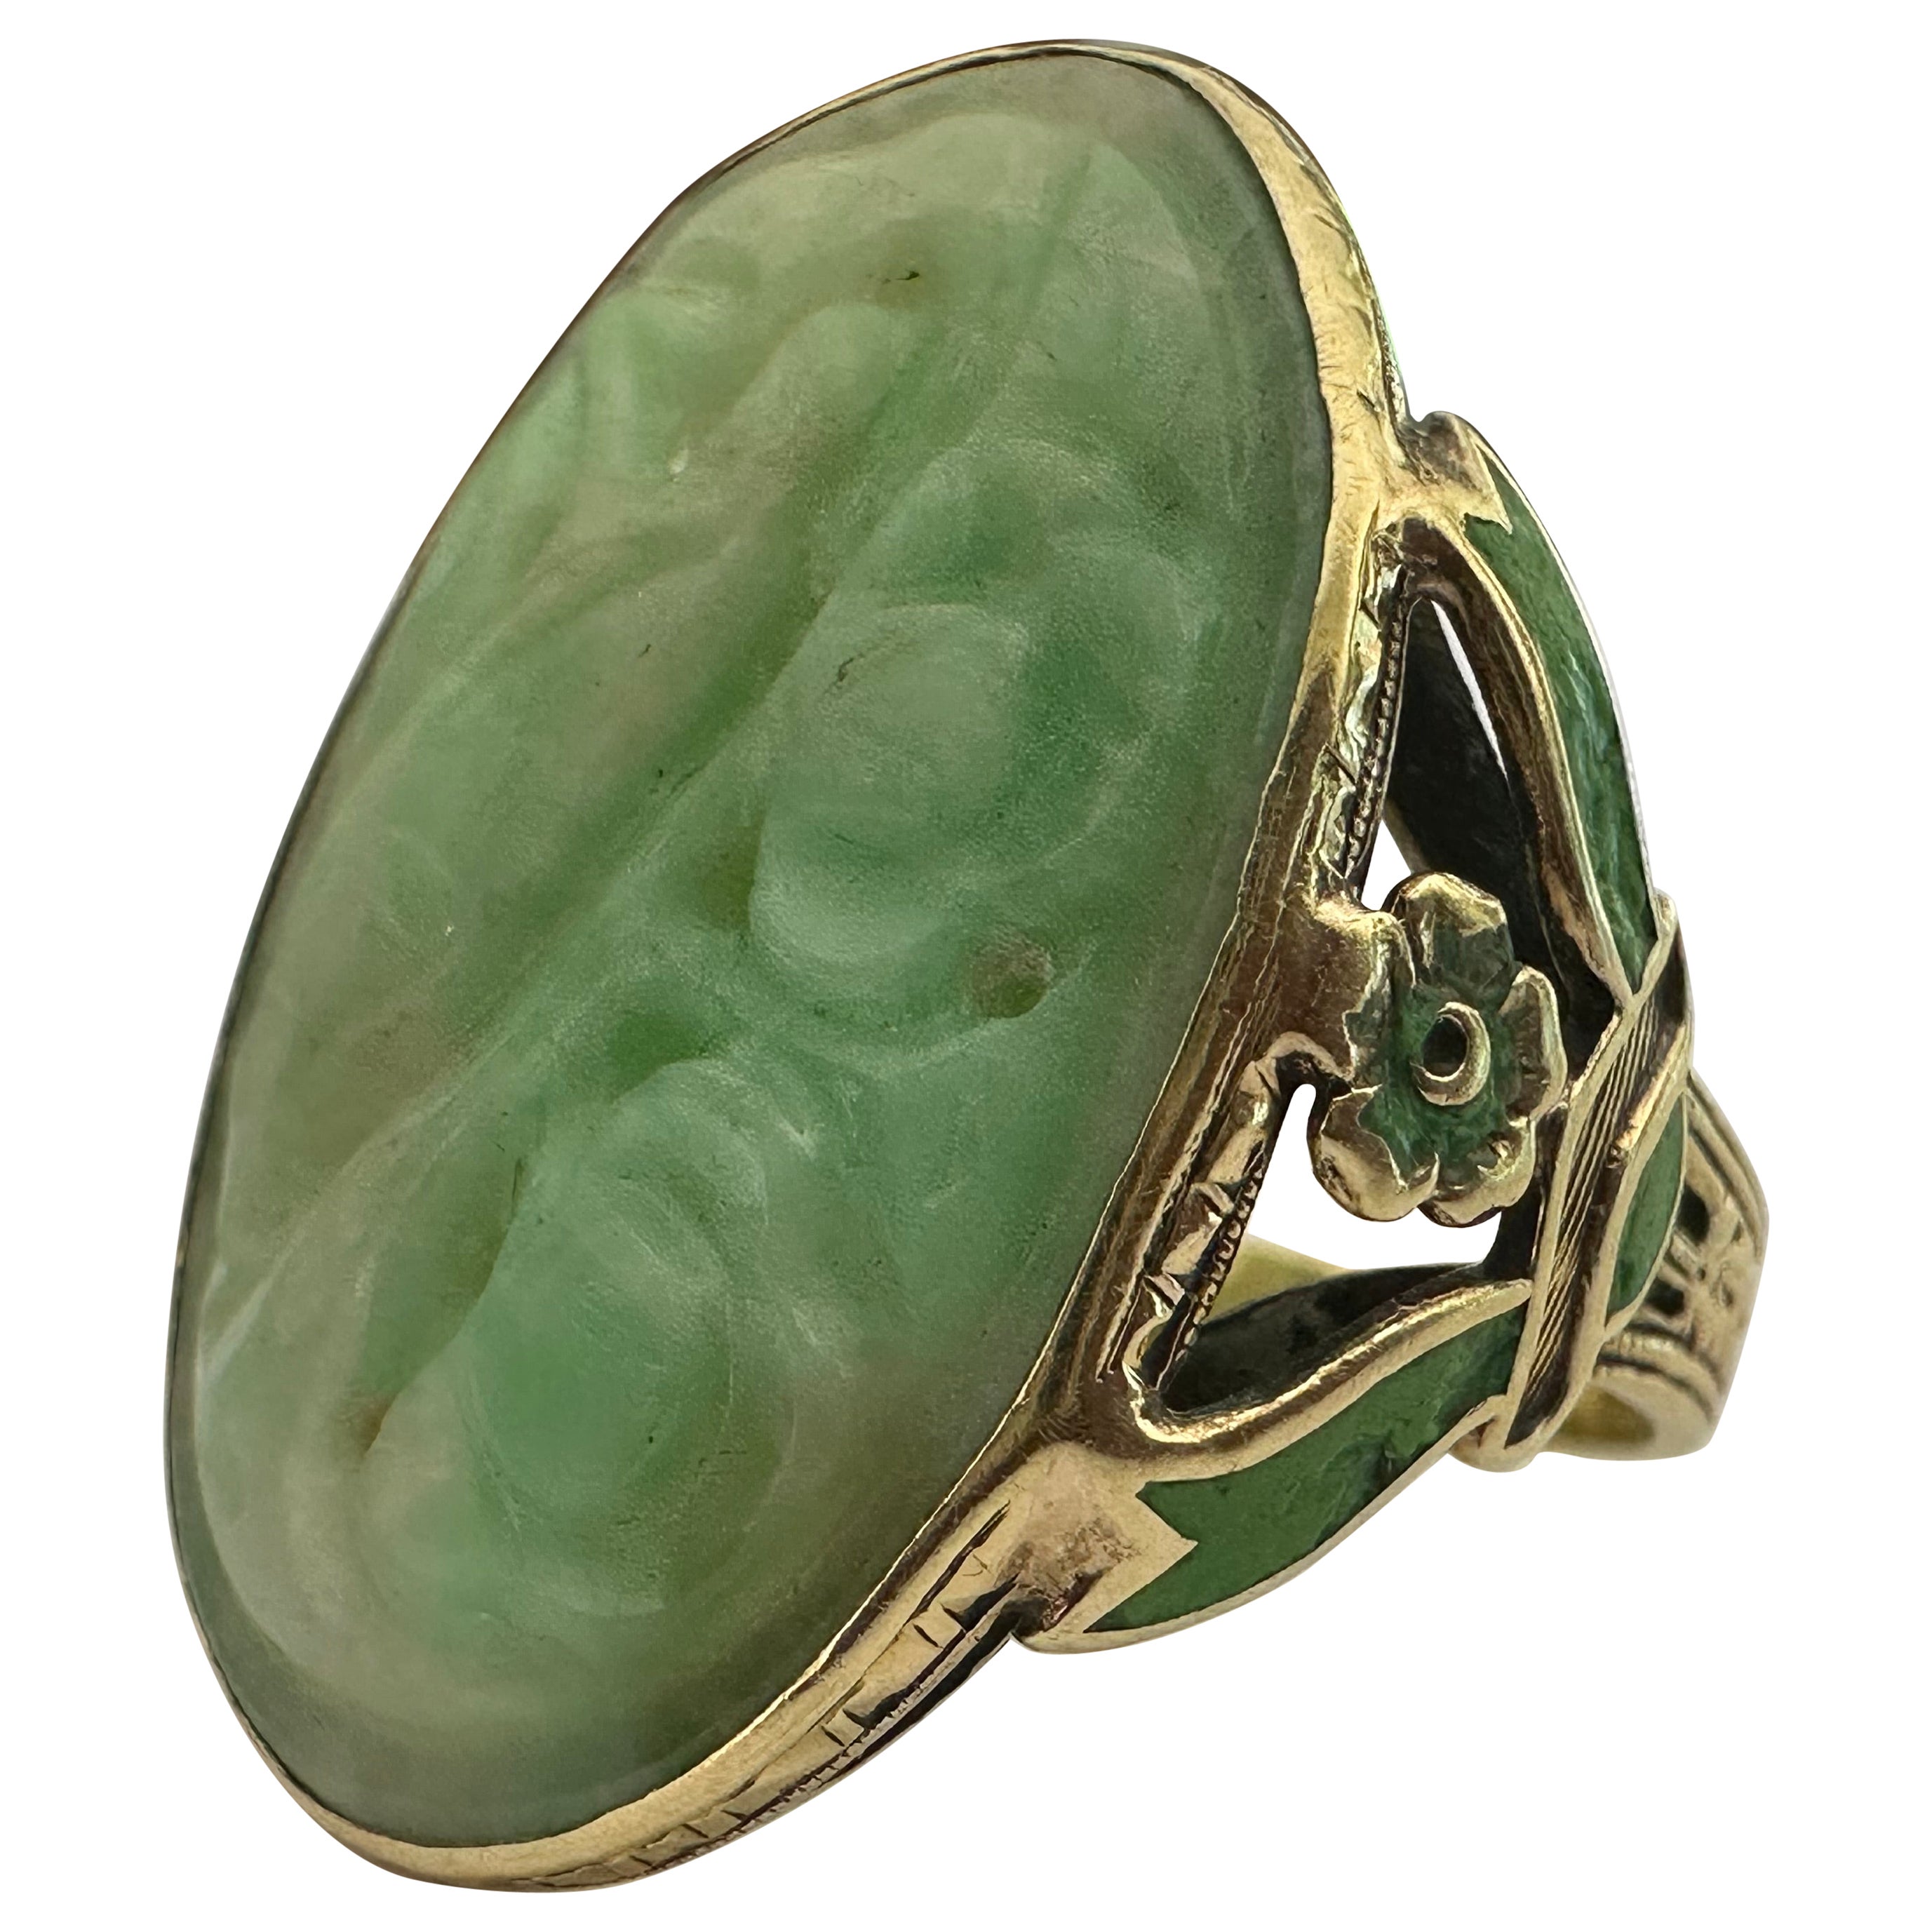 Vintage Carved Jadeite and Green Enamel Cocktail Ring 